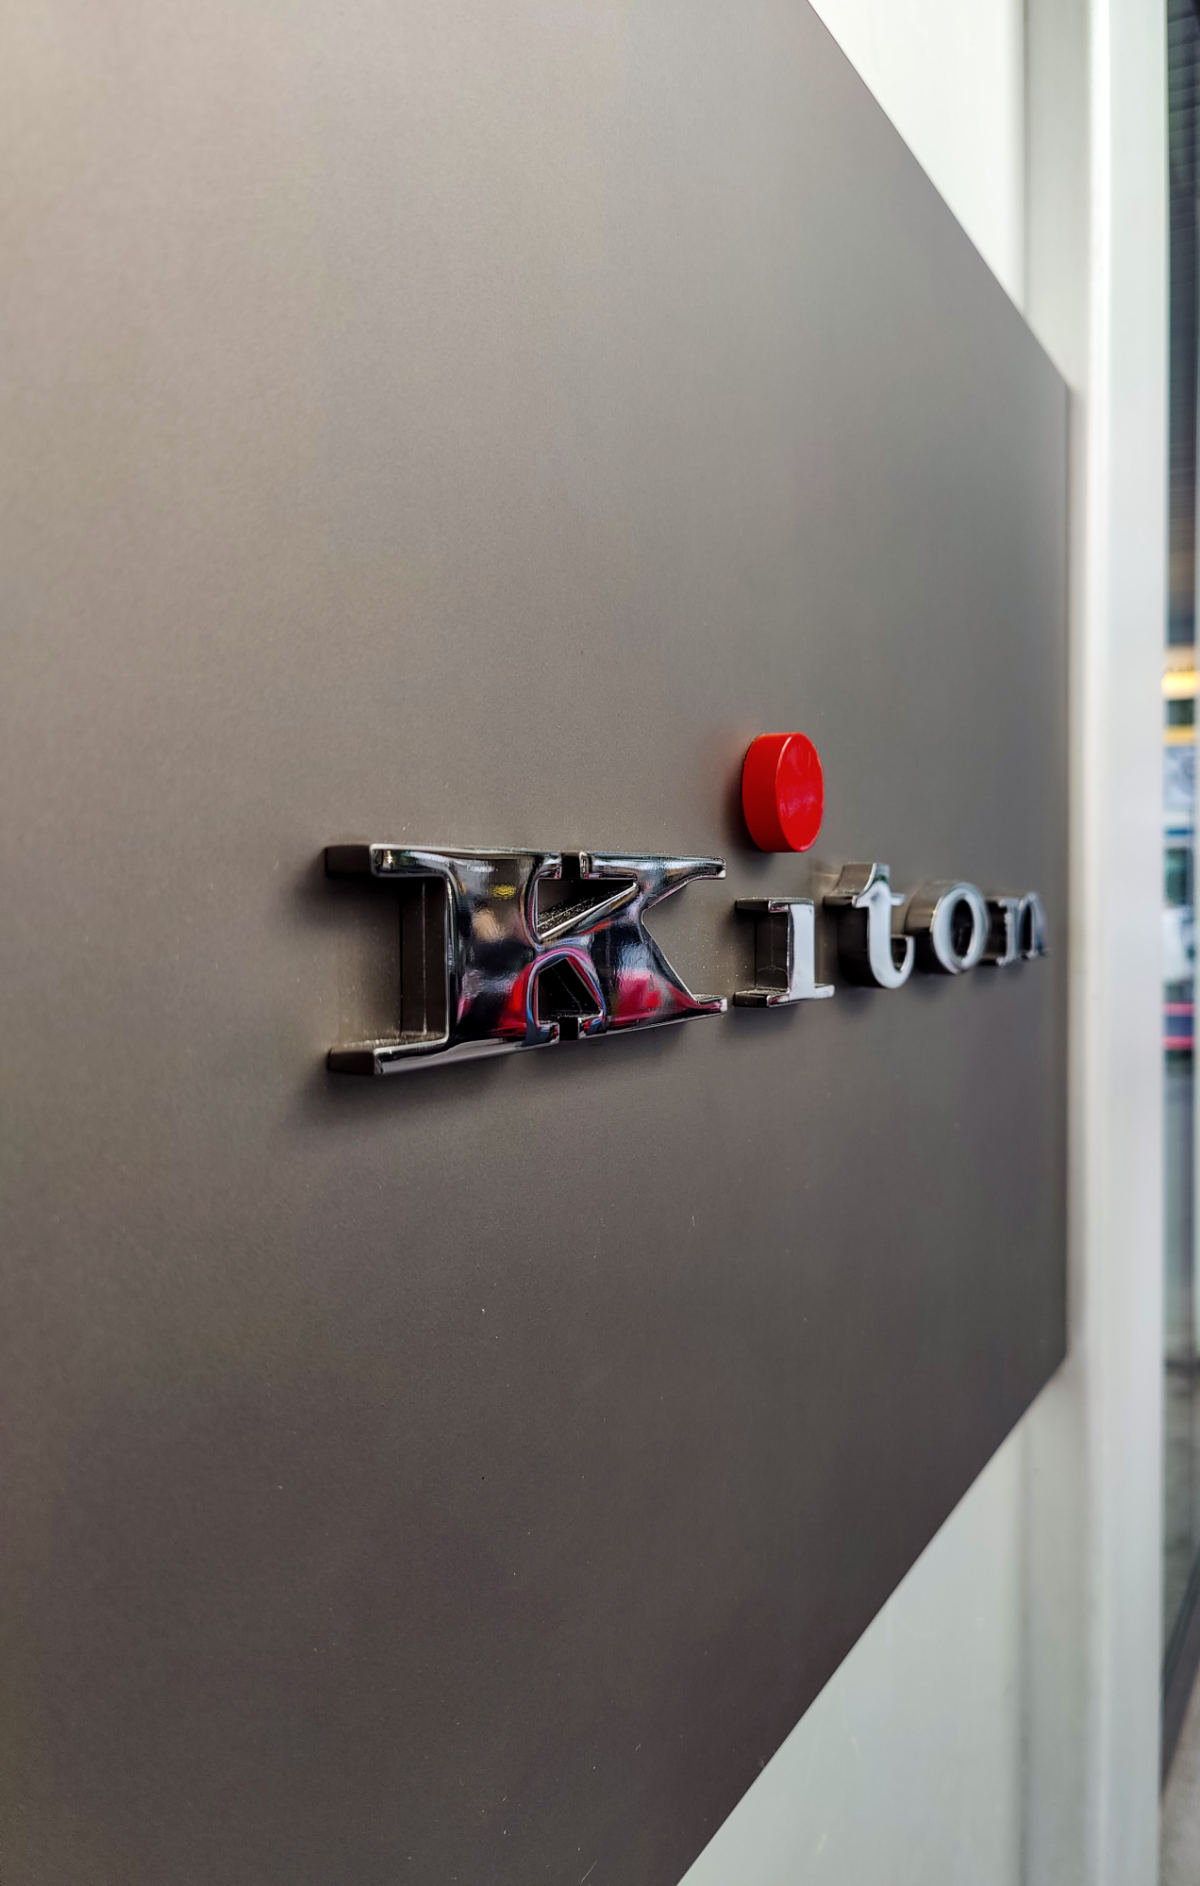 Kiton's Redesigned Boutique In Zurich